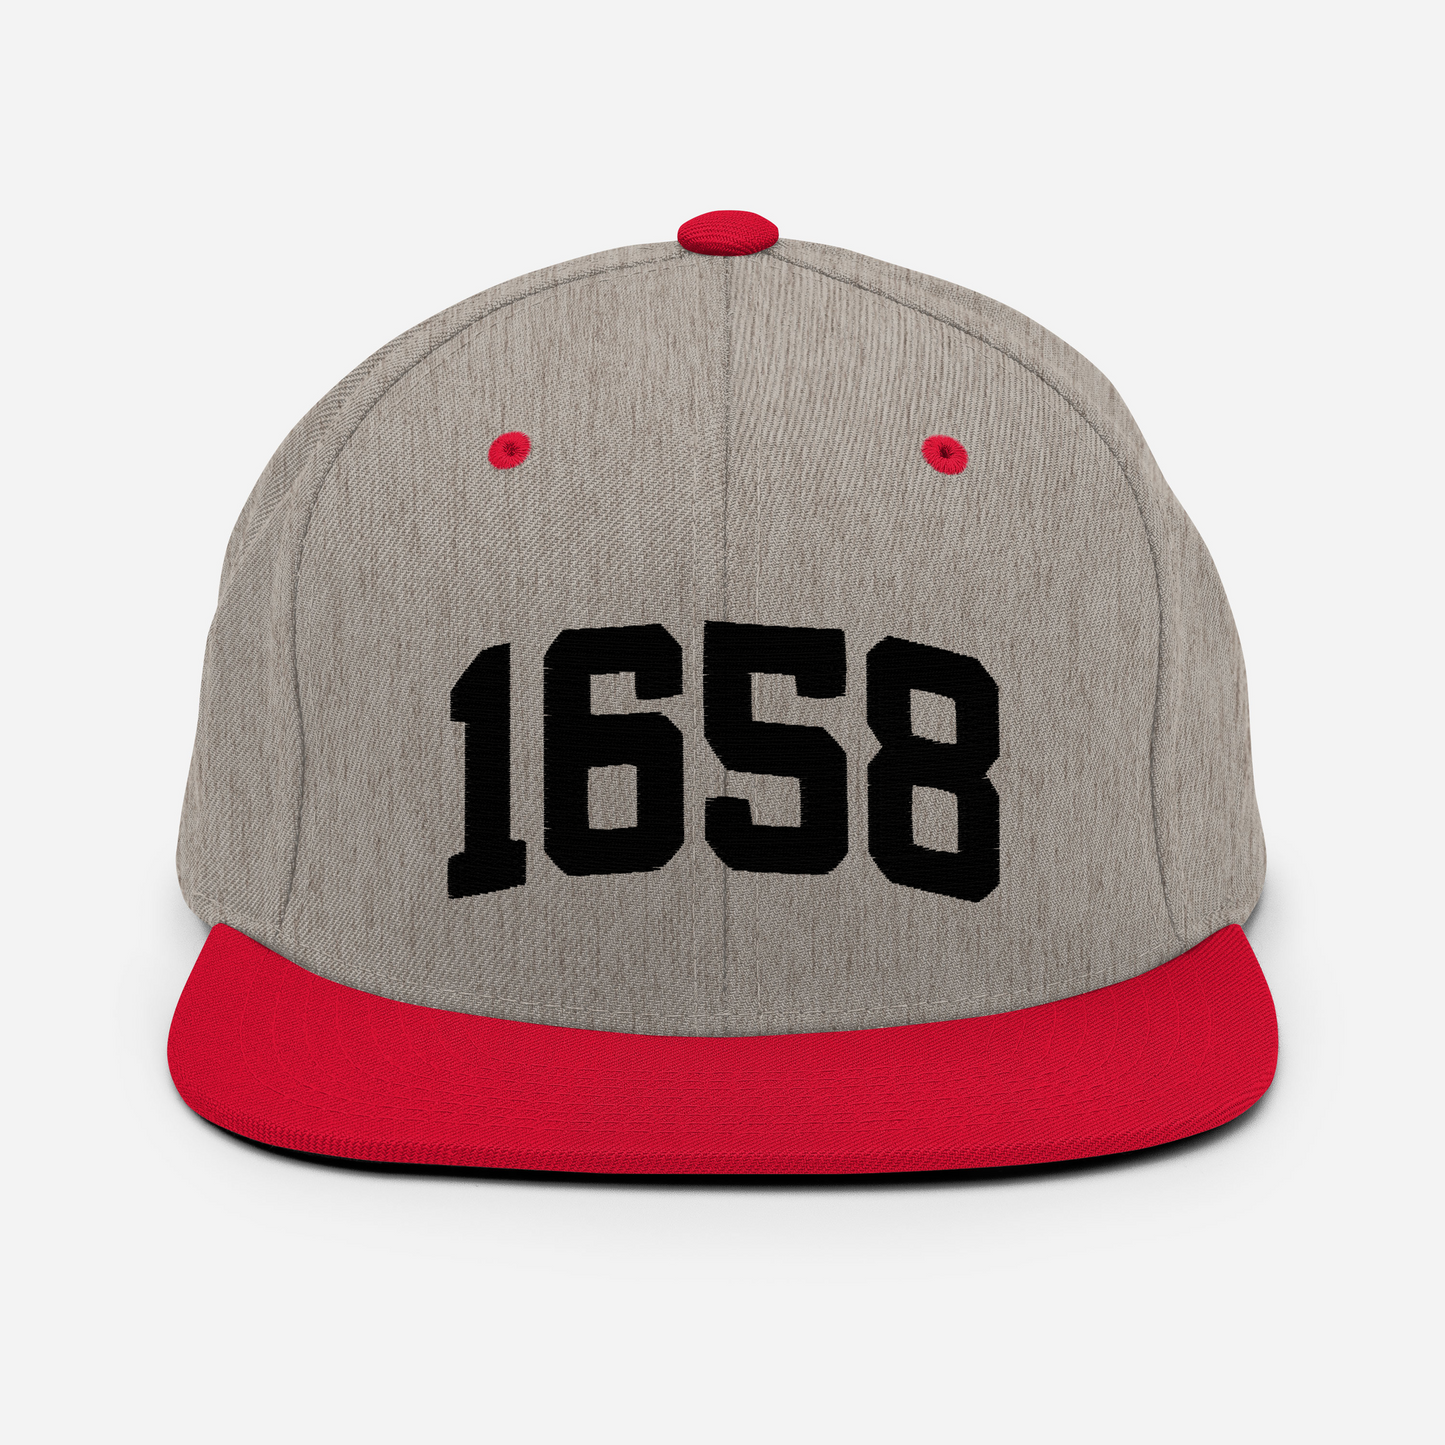 1658 Snapback Hat